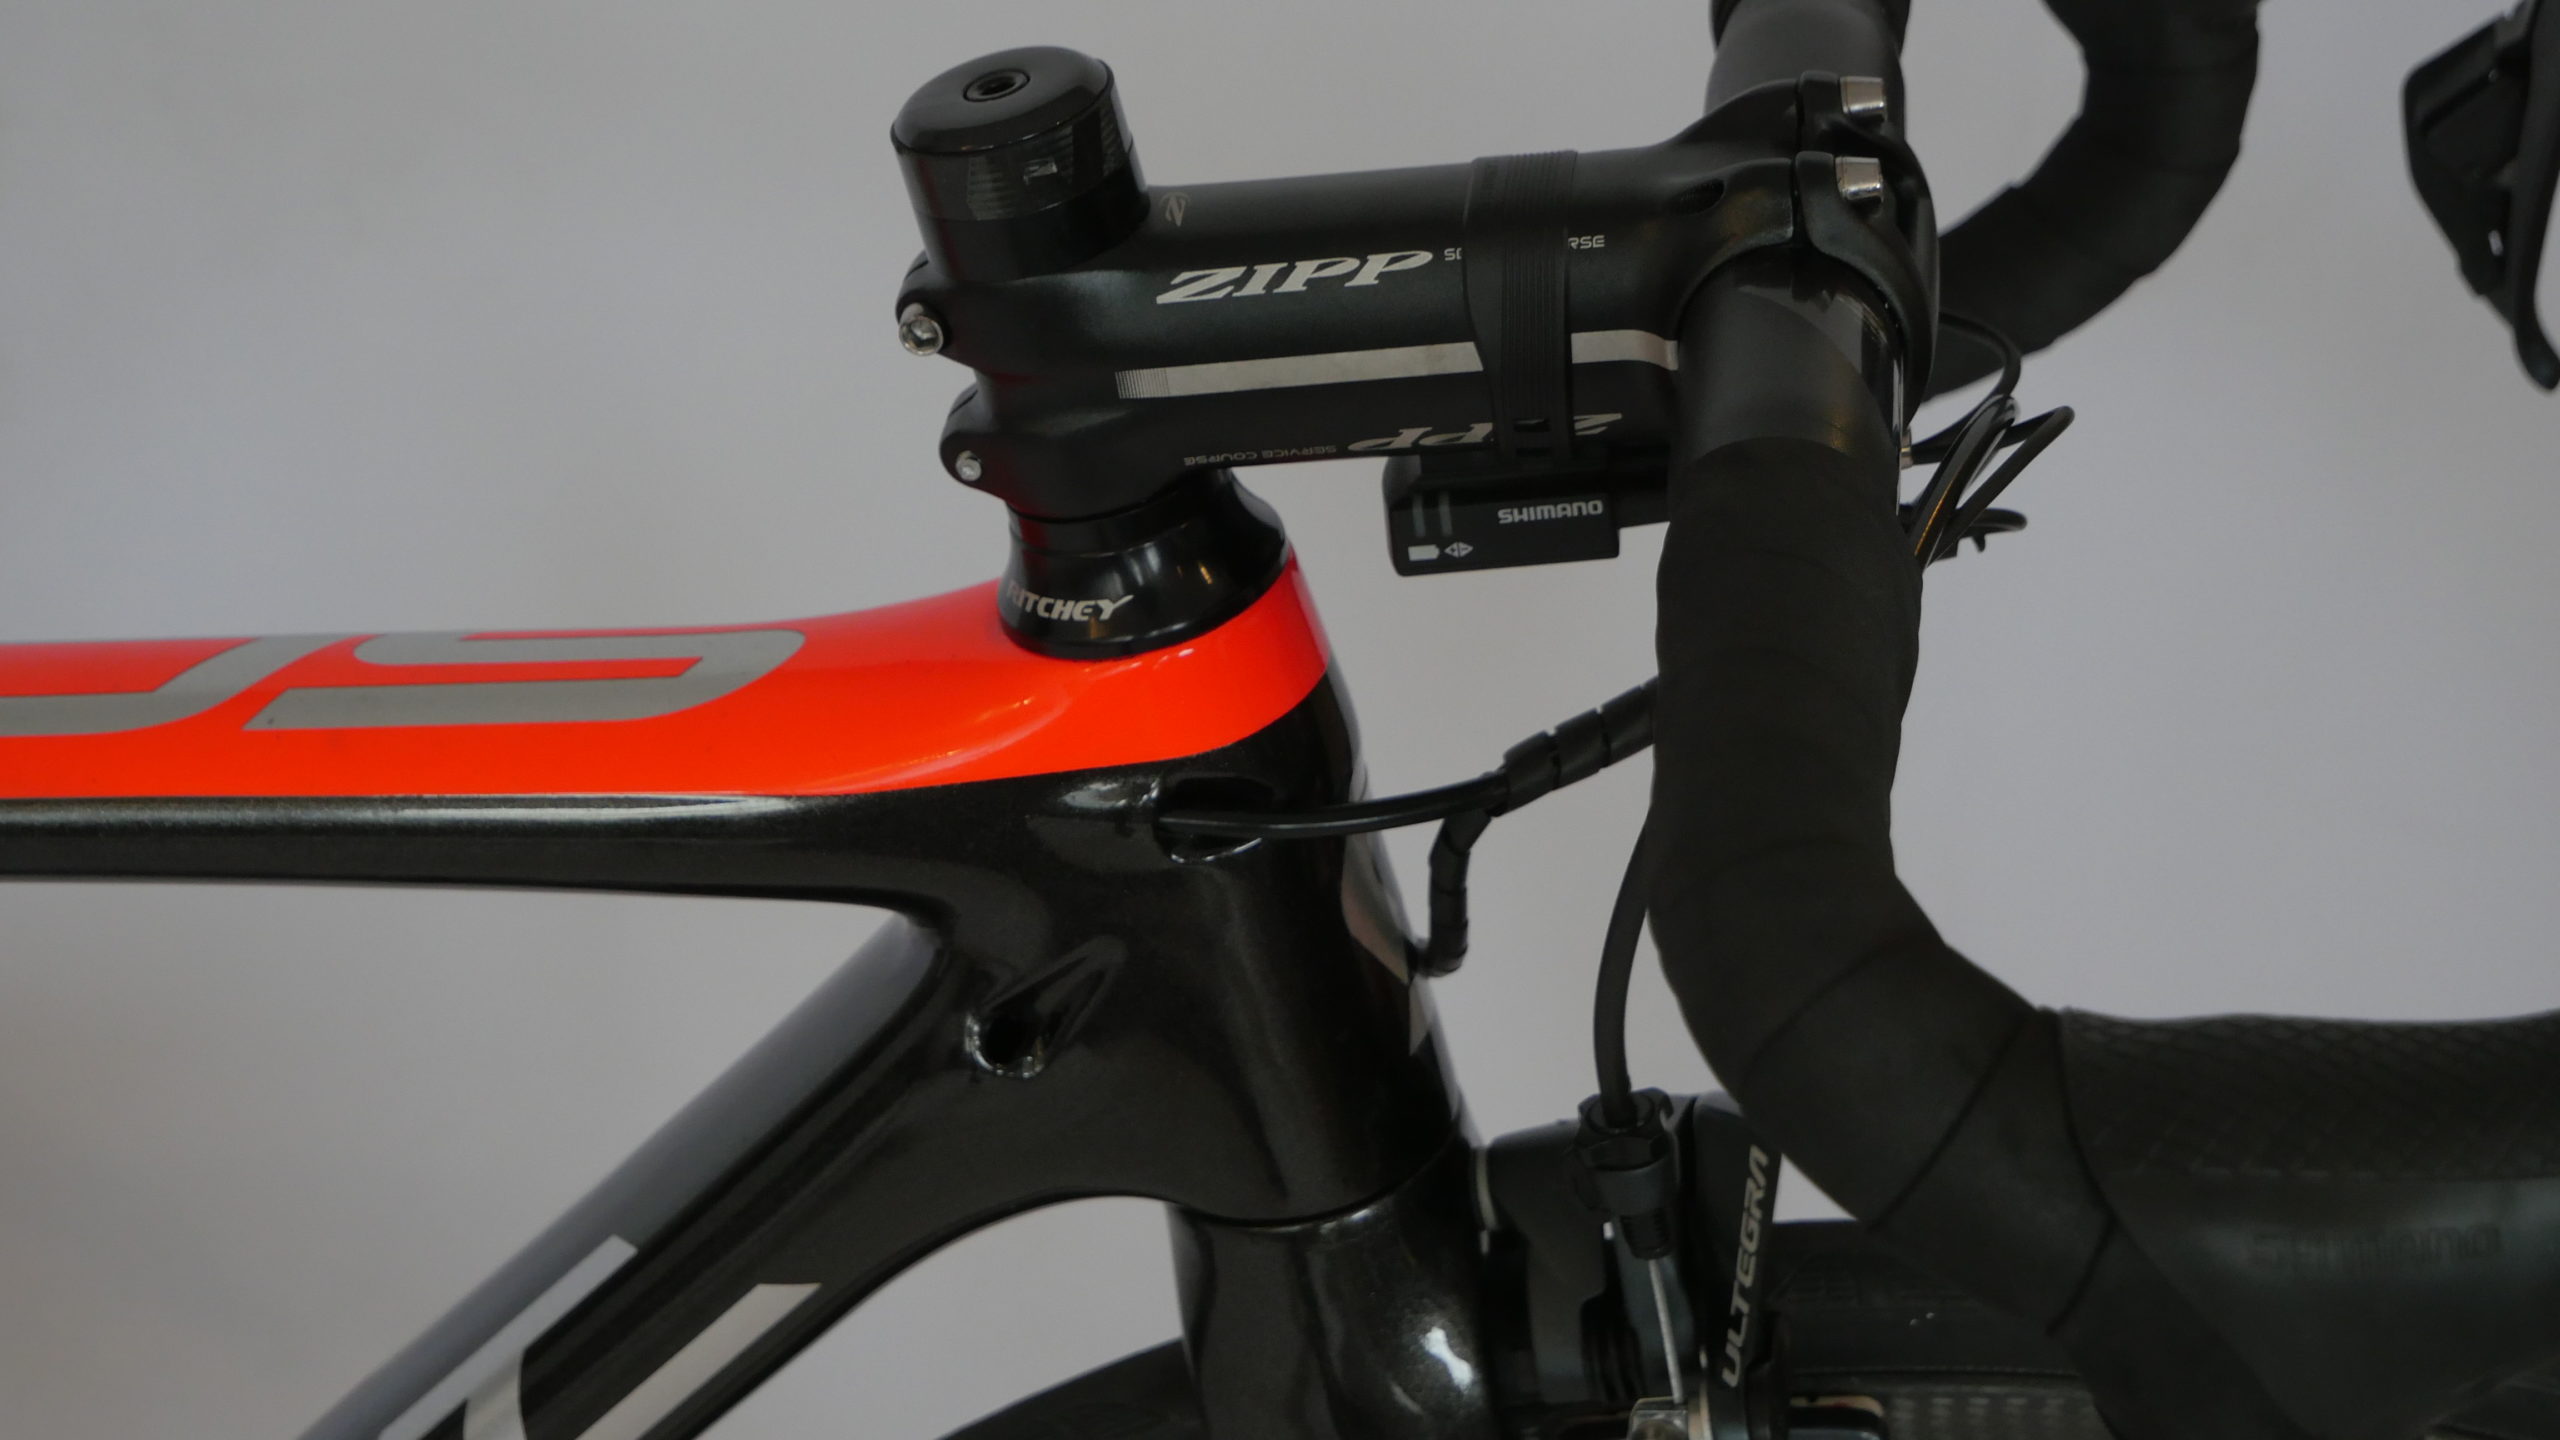 Road Bike Scott Addict RC Shimano Ultegra Di2 Noir / Gris / Orange